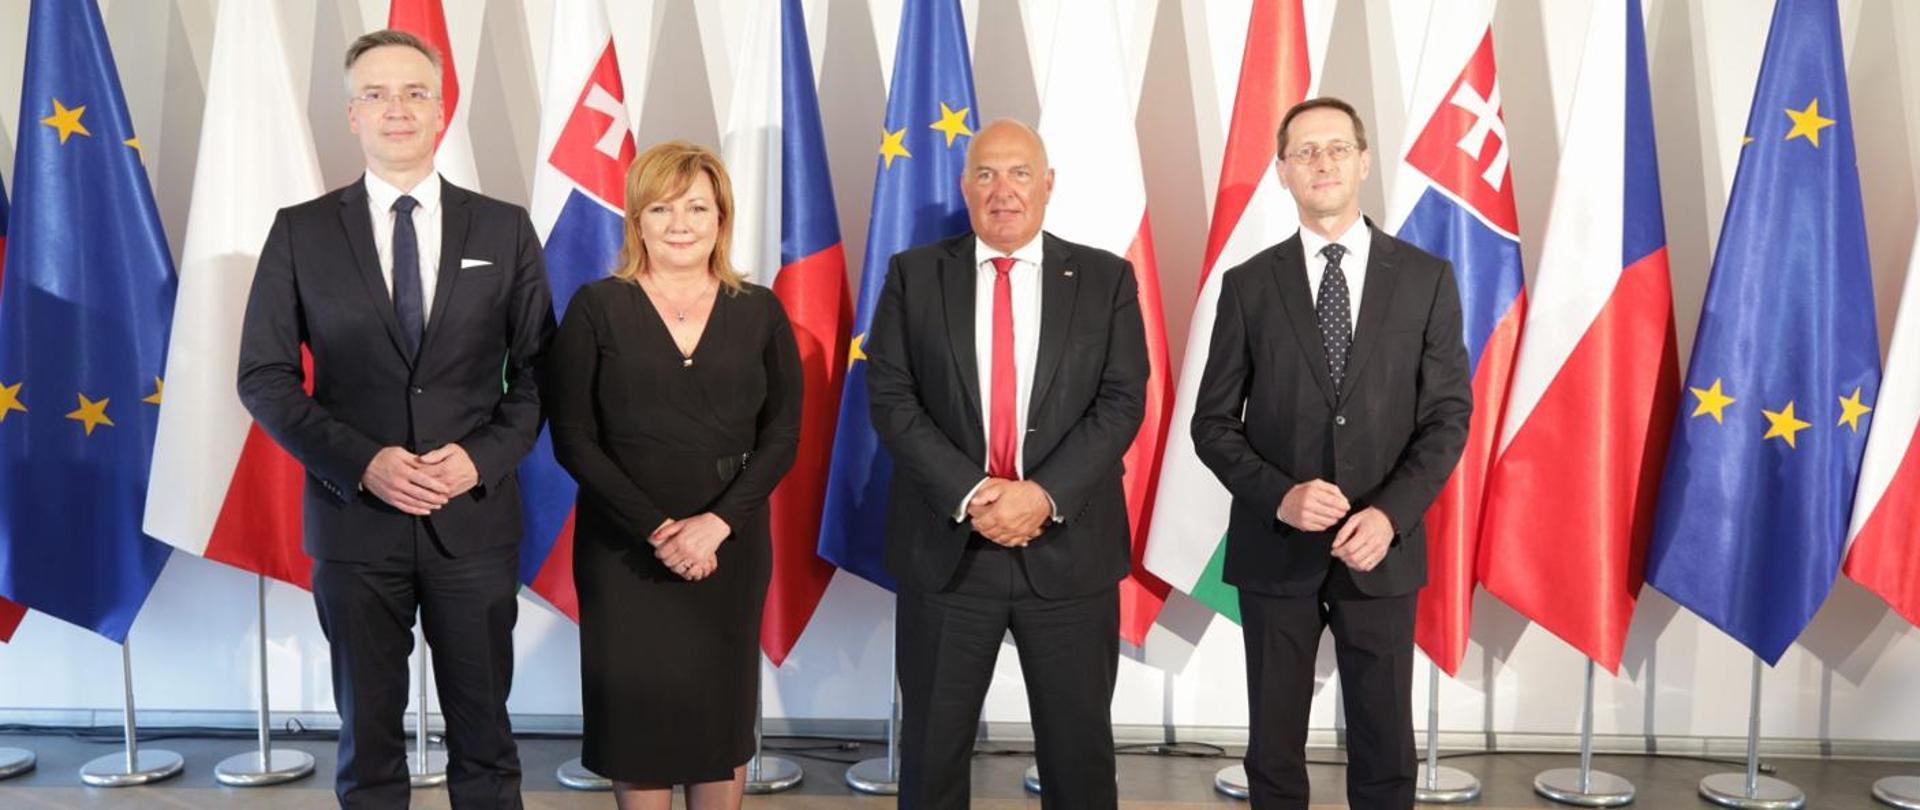 Visegrad Group Finance Ministers met in Warsaw